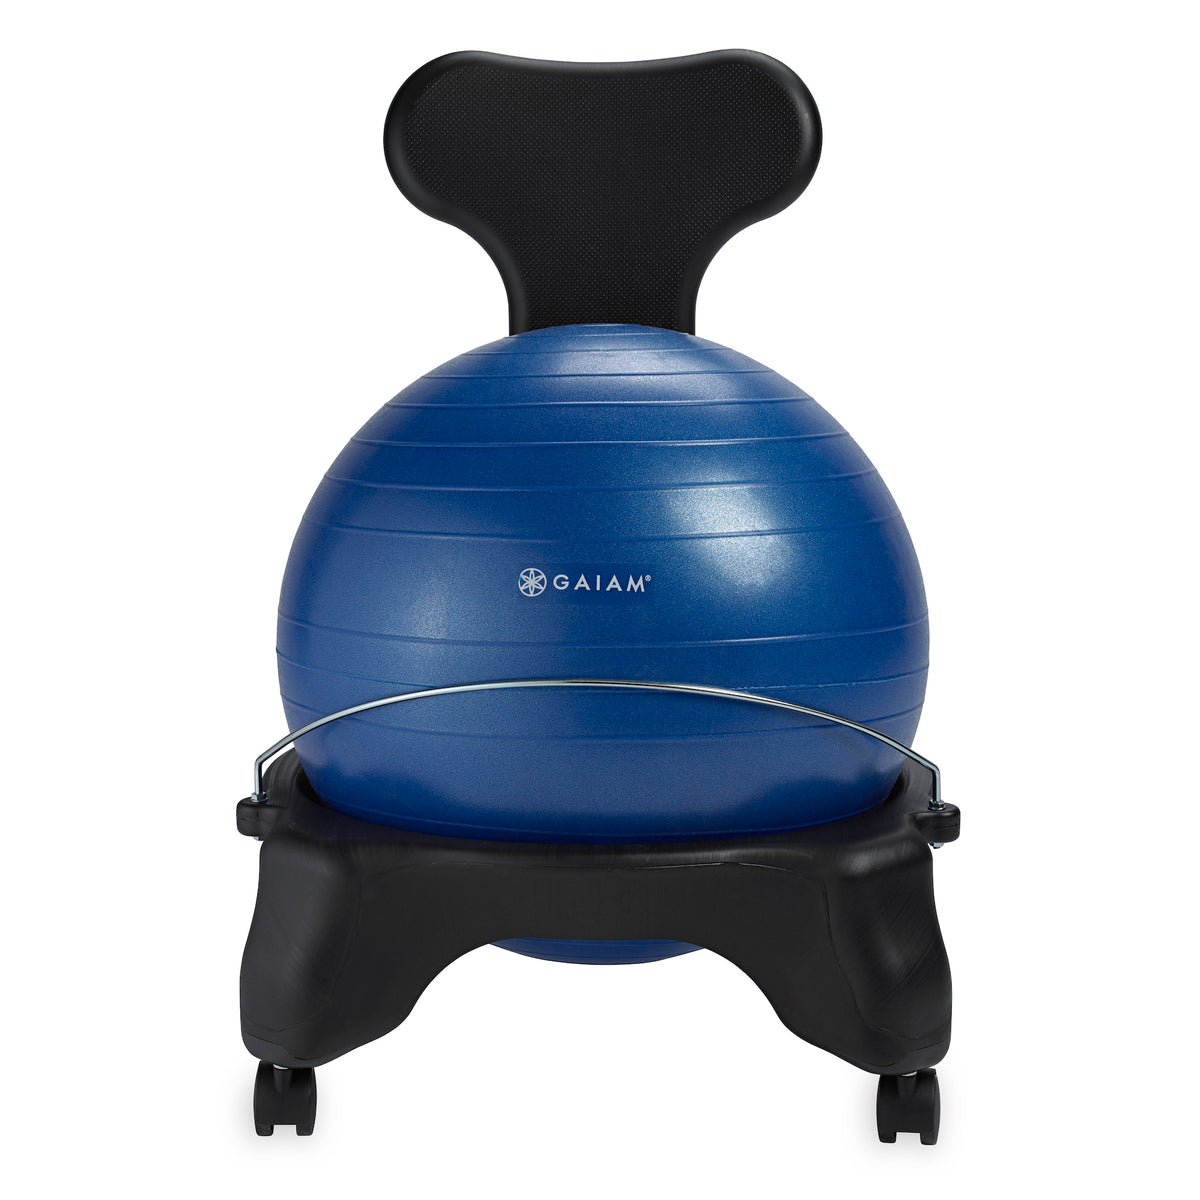 Gaiam Classic Balance Ball® Chair blue front